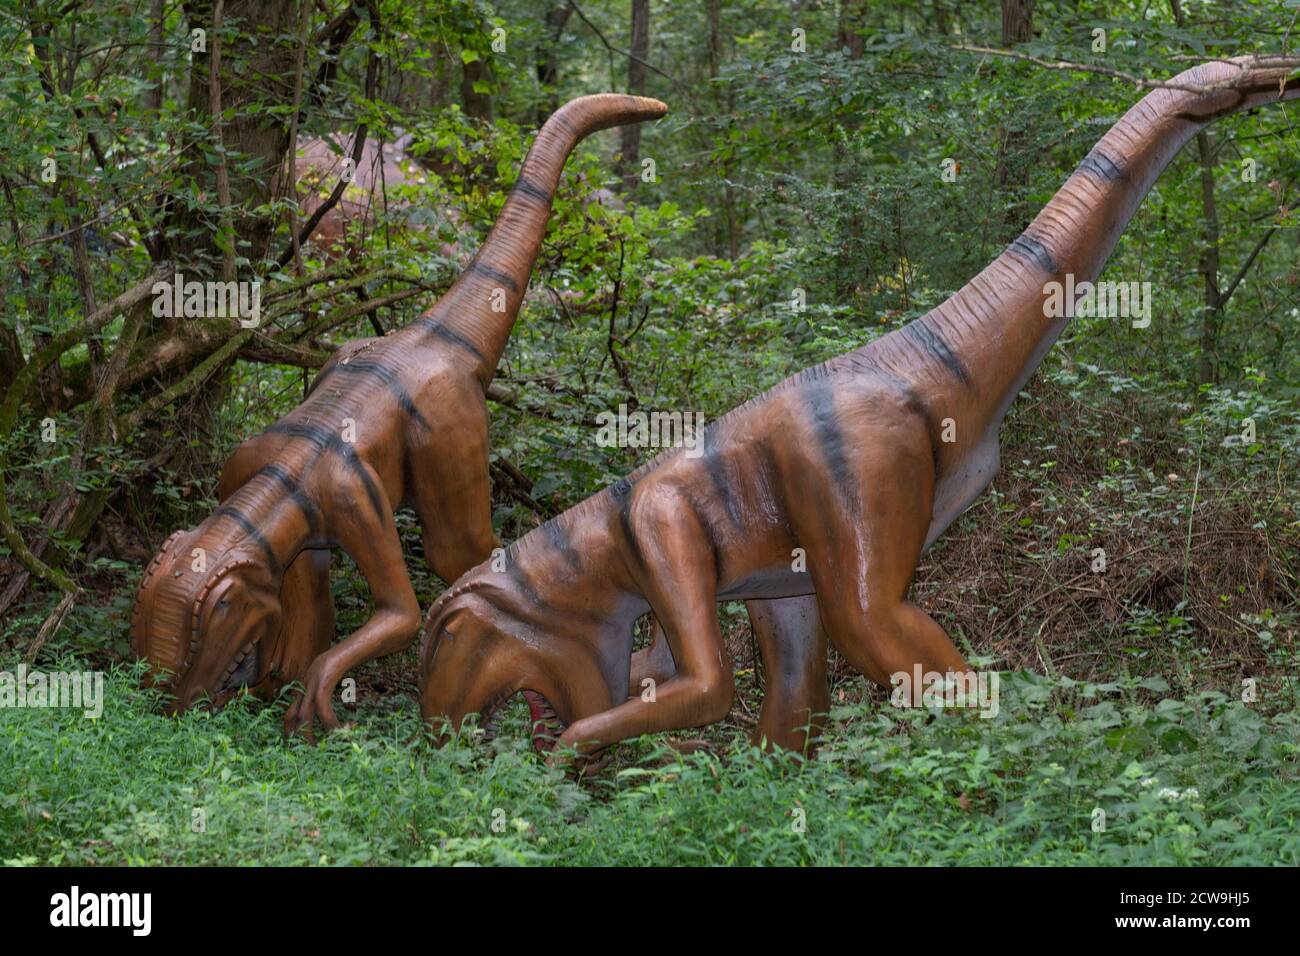 Alamy Dinosaur stock photography hi-res images - and kentucky world